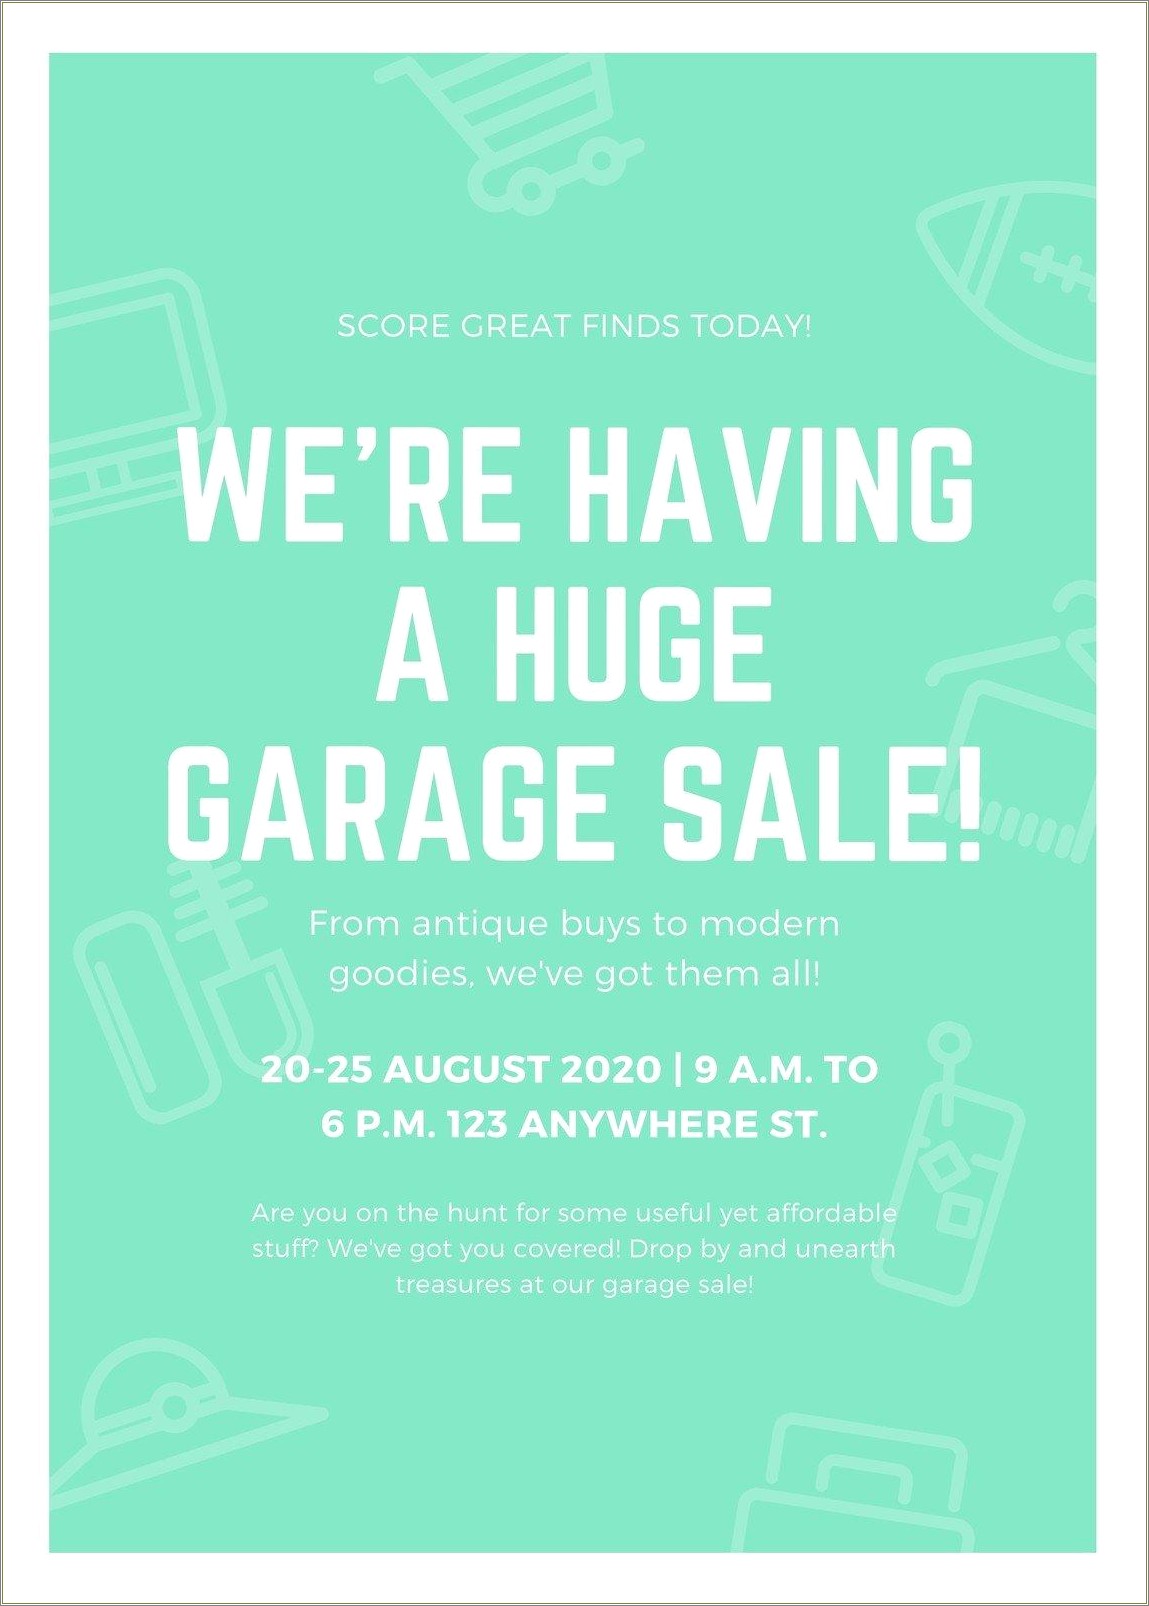 Free Garage Sale Price Tag Template